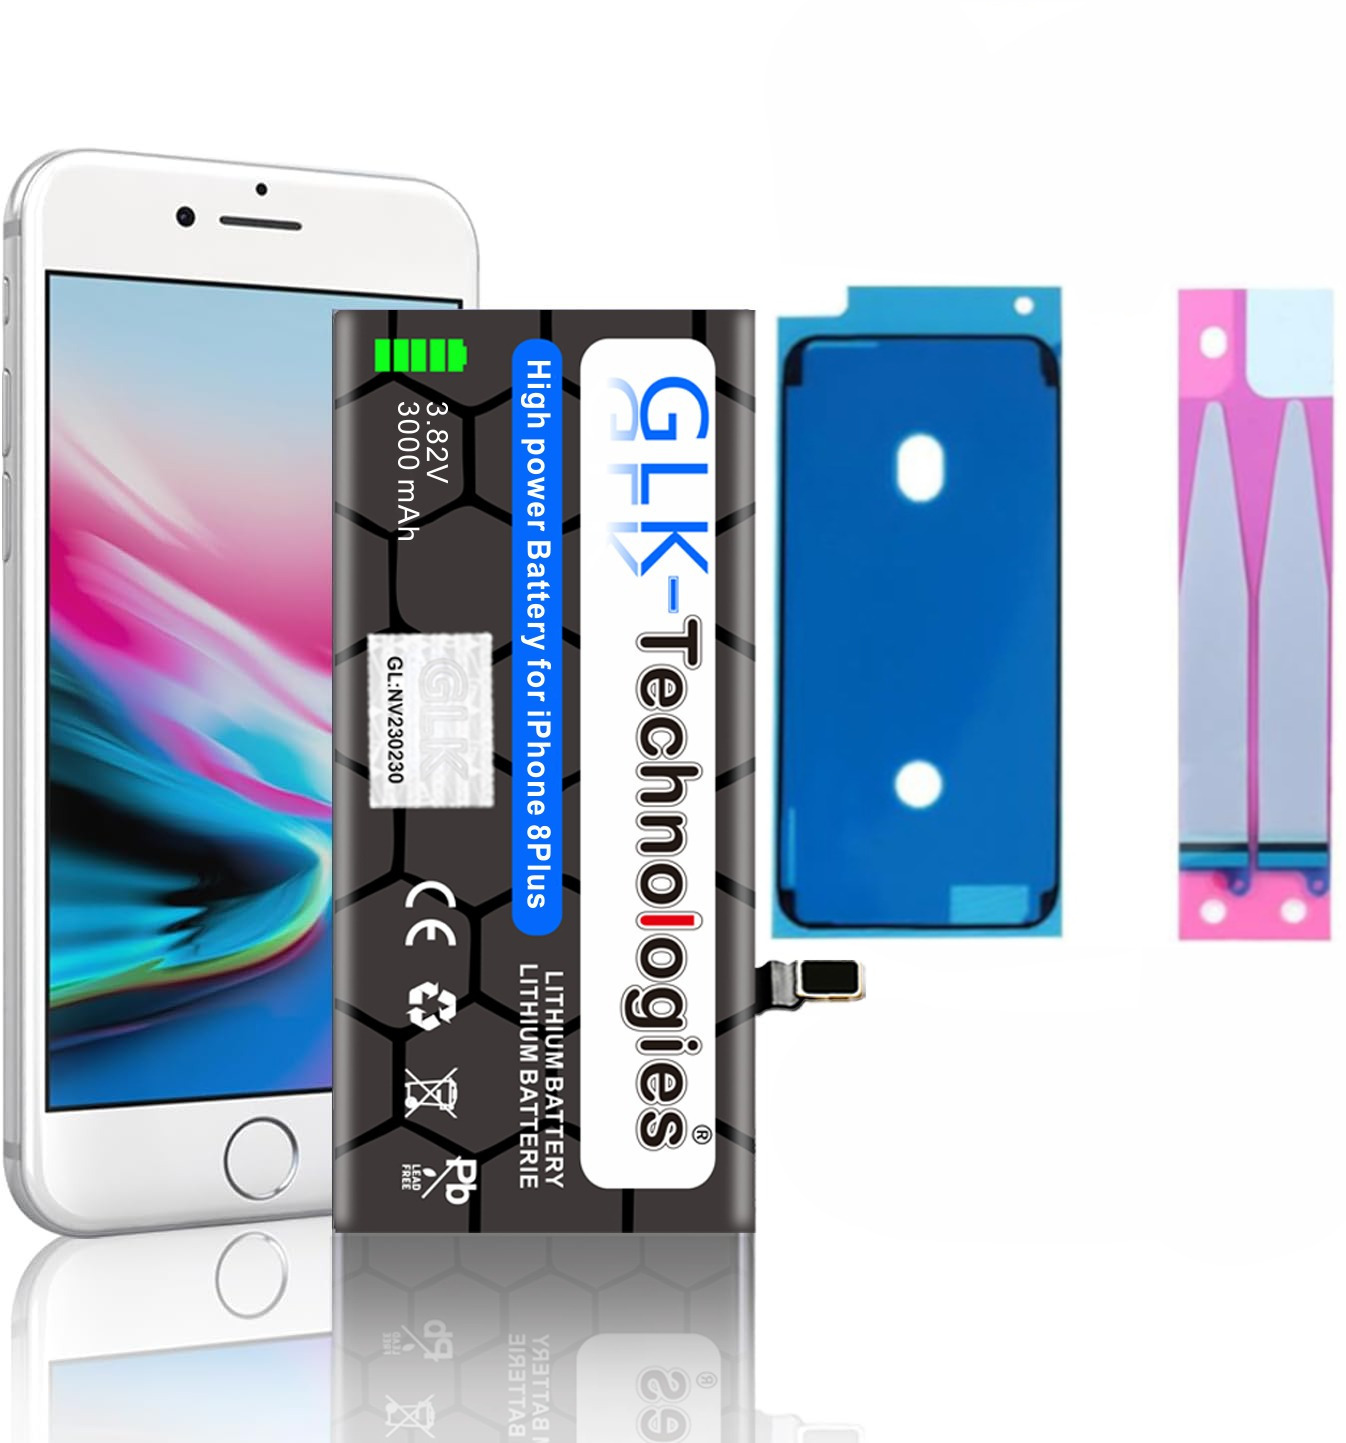 Plus Akku, Smartphone 3.8 3000mAh Li-Ion iPhone 8 inkl. GLK-TECHNOLOGIES Volt, Ersatz Klebebandsätze Lithium-Ionen, Apple 2X